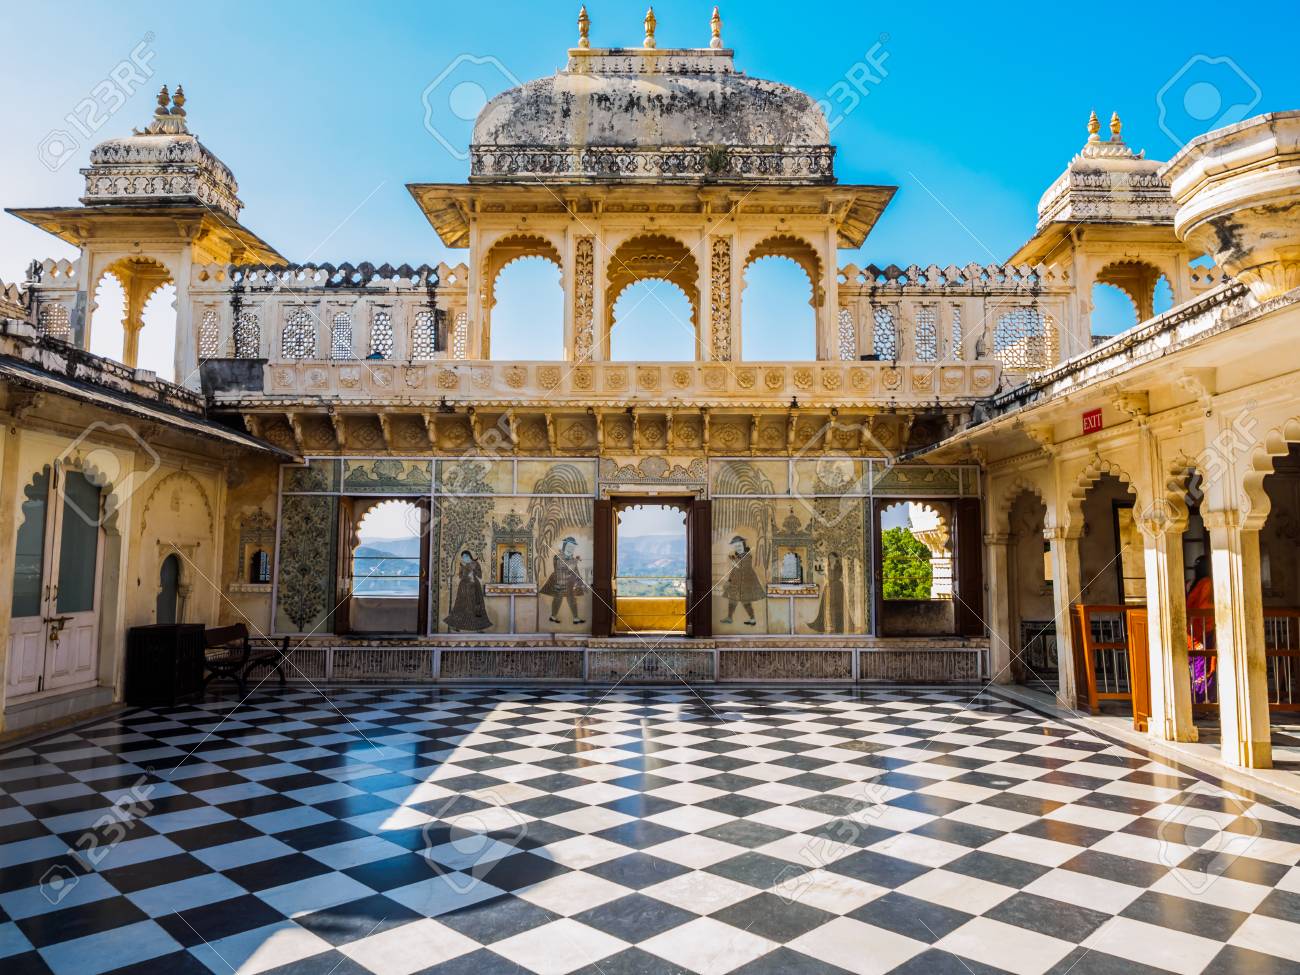 Courtyard at City Palace in Udaipur, Rajasthan, India